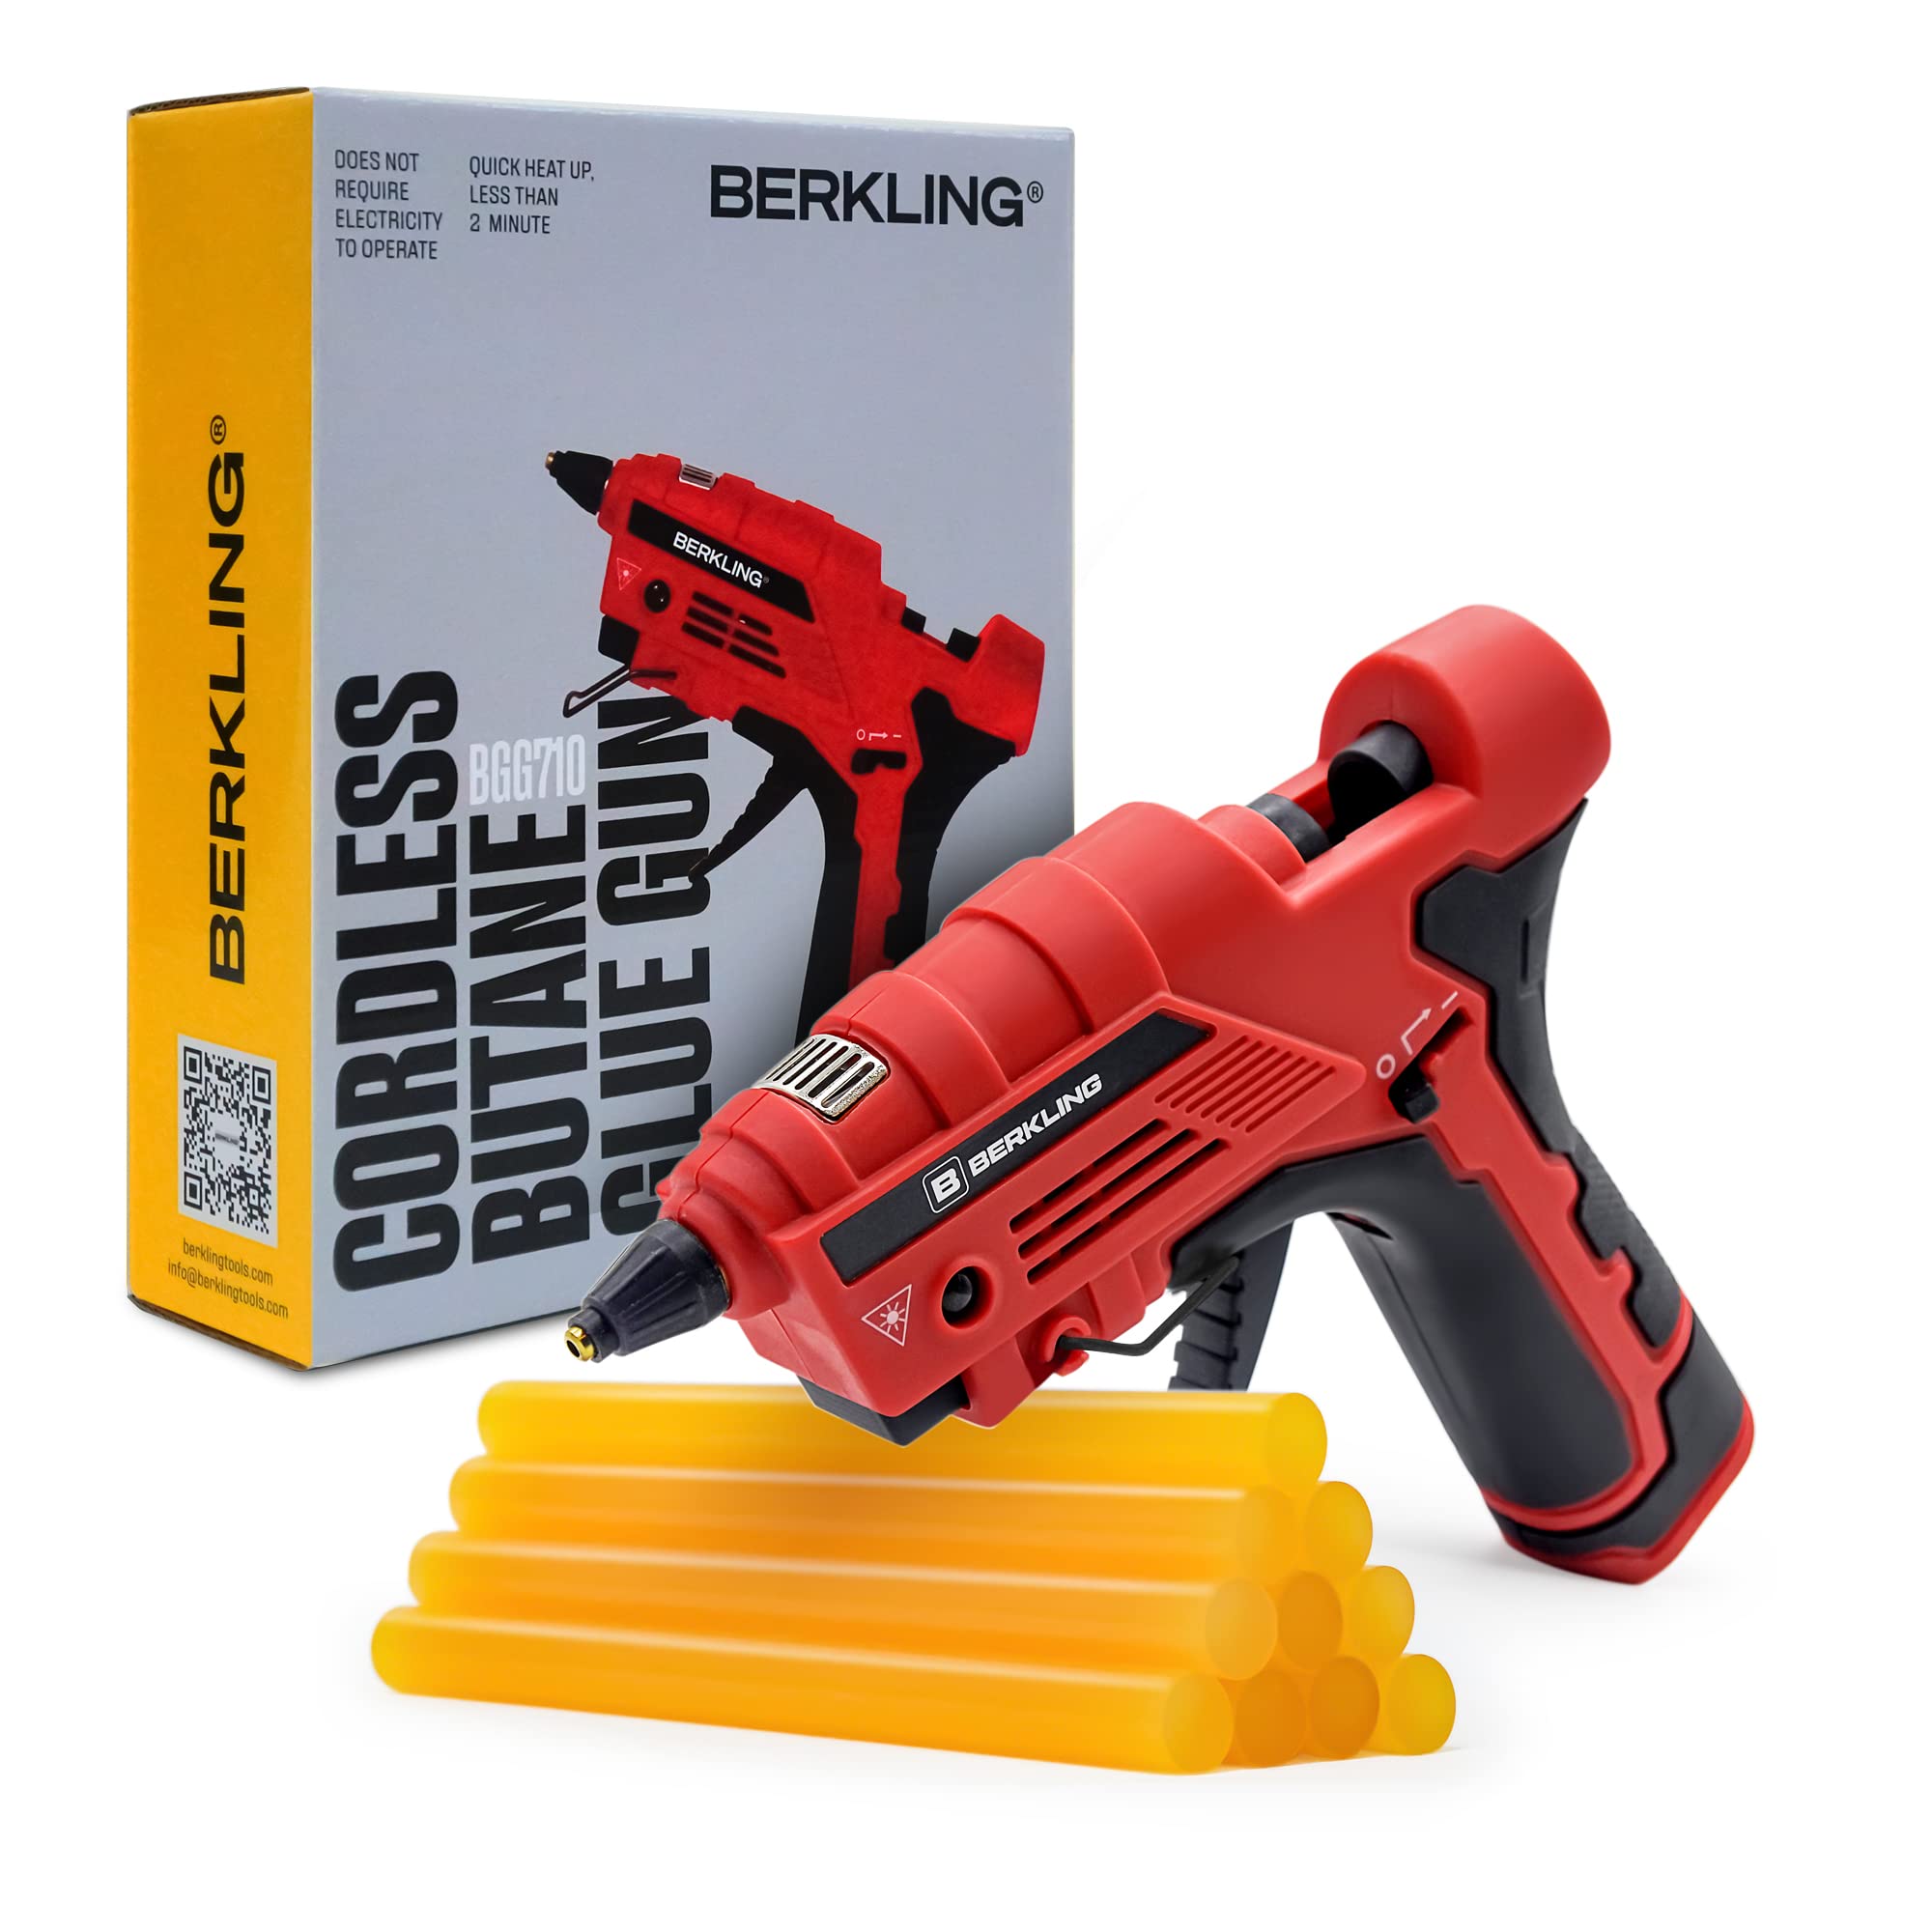 Berkling BBG-710 Cordless Butane Hot Glue Gun Heats Up Faster Than Electric or Battery. Smart Auto Temp Control Large 7ml Fu